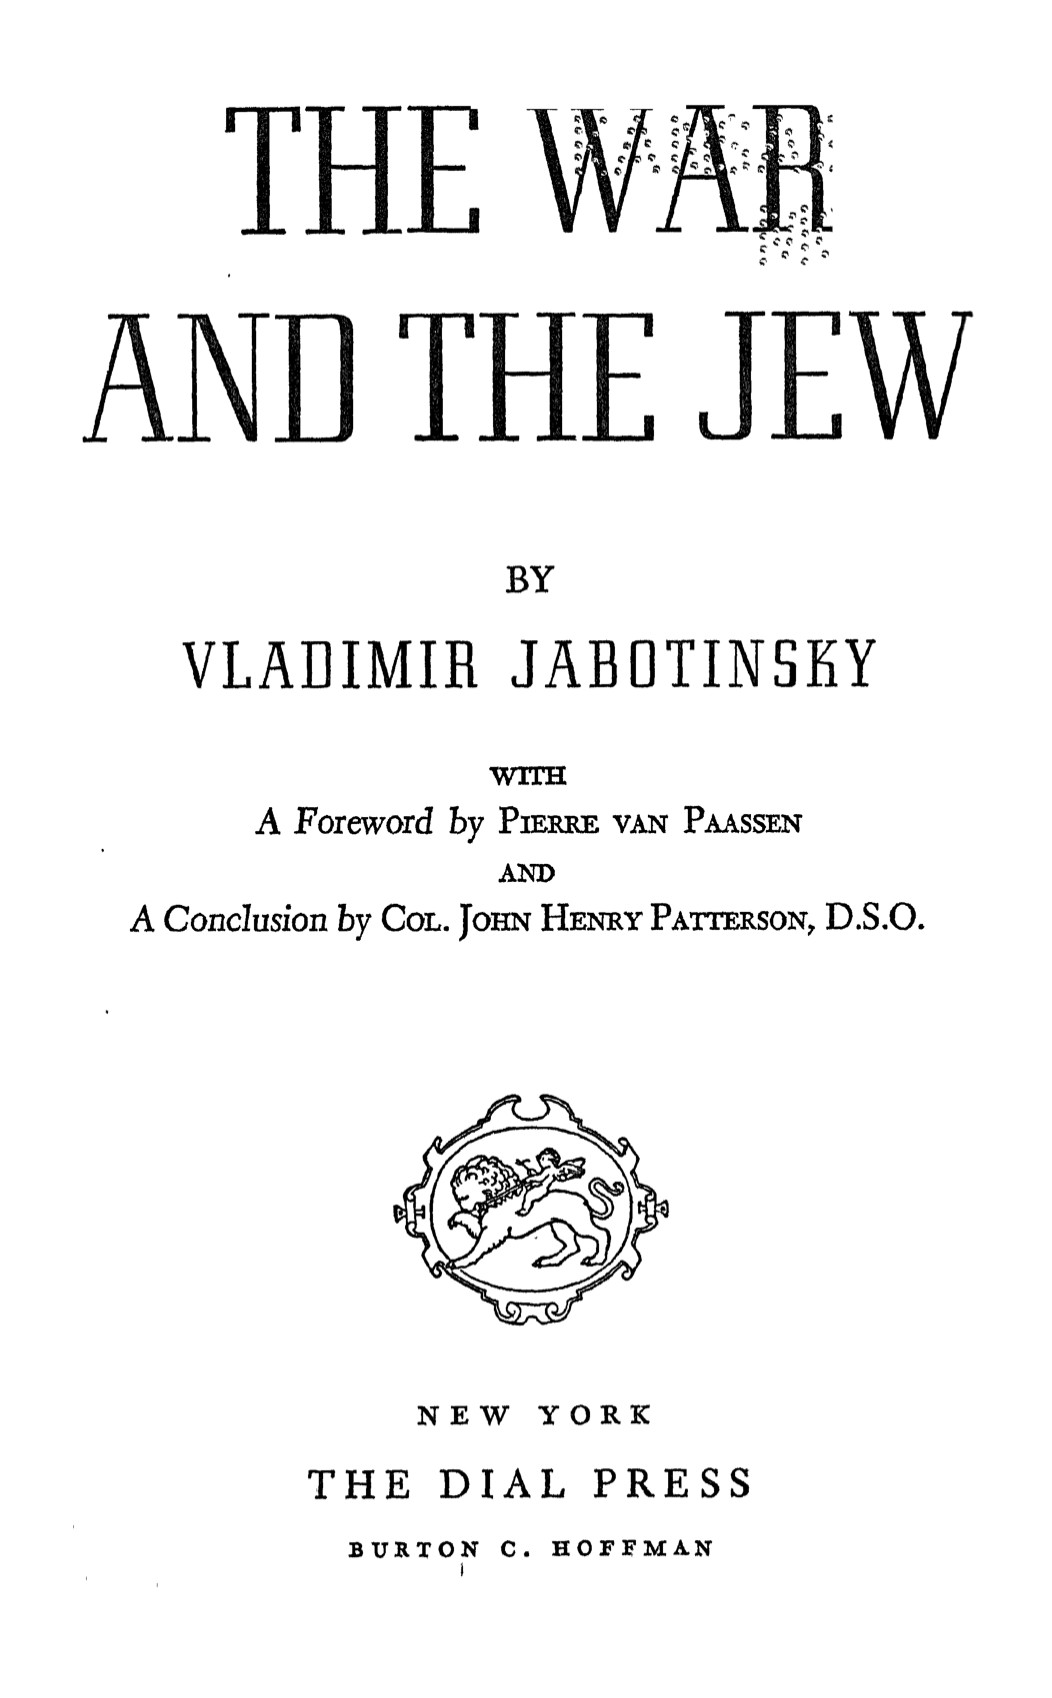 The War and The Jew (1942) by Vladimir Jabotinsky